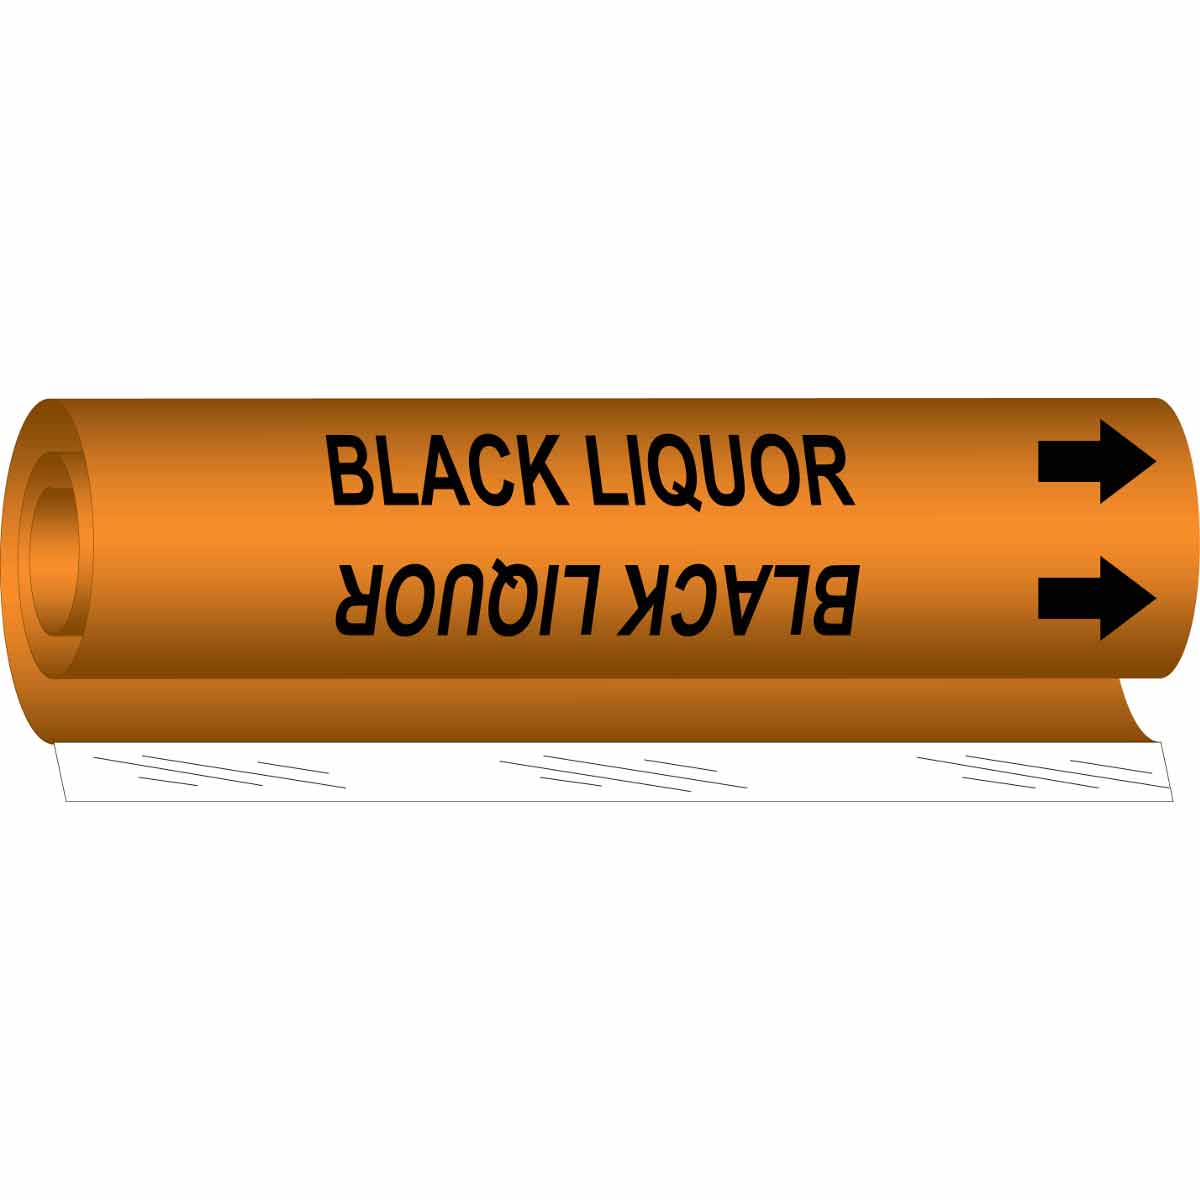 BLACK LIQUOR BLACK / ORANGE